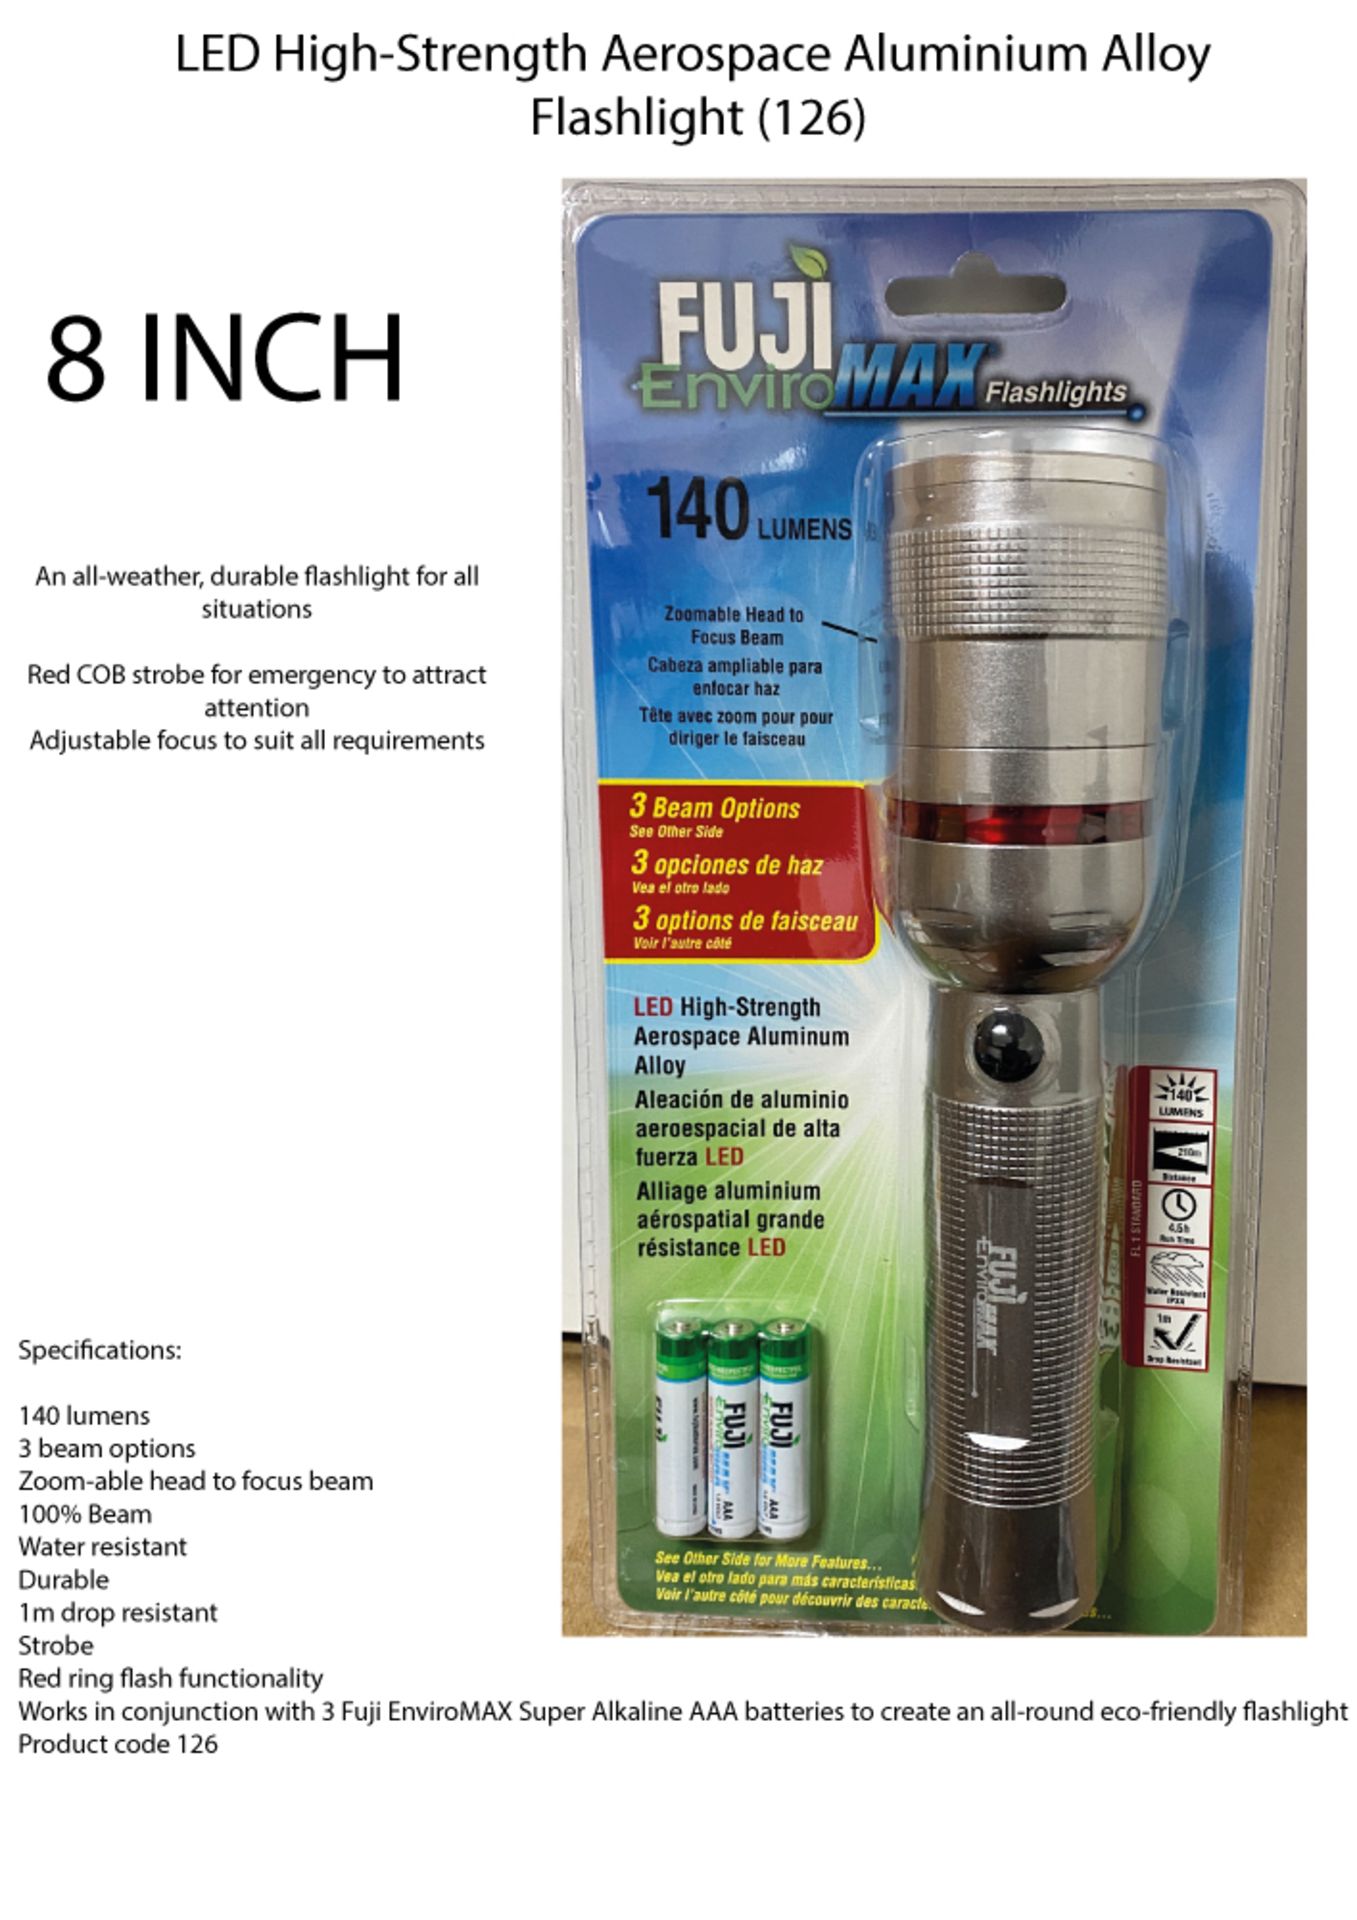 Fuji EnviroMax 140 Lumens Flashlight - Image 2 of 2